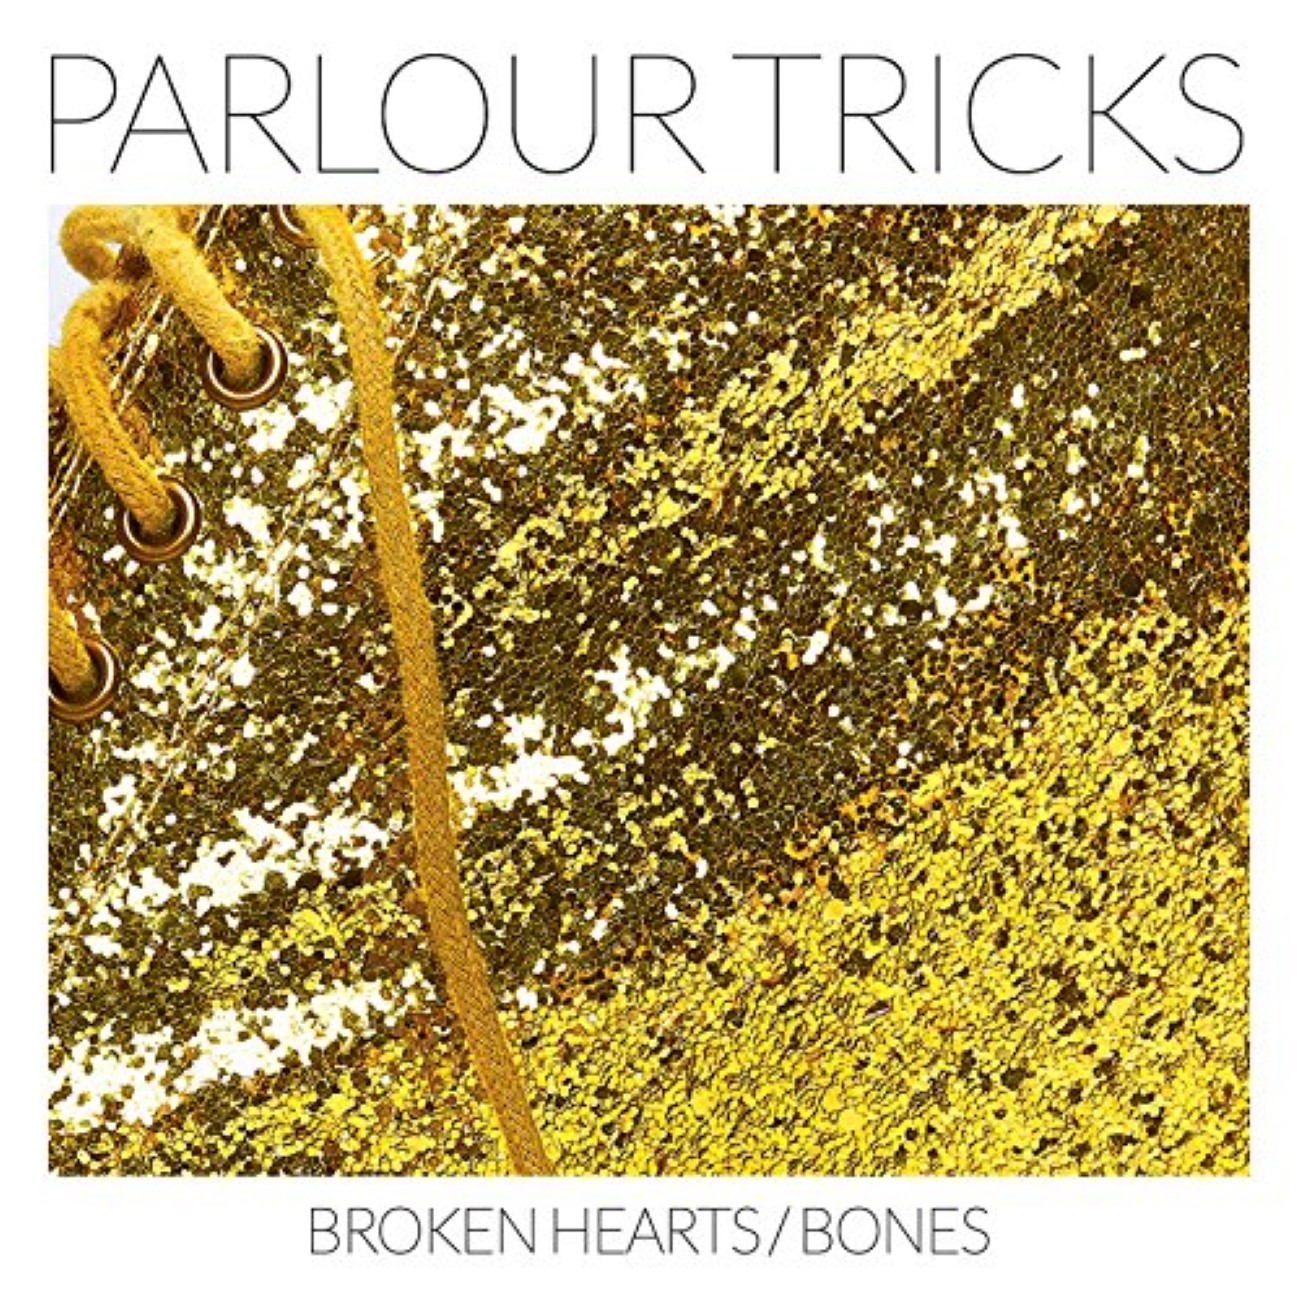 Now Streaming: Parlour Tricks – Broken Hearts / Bones  ⭐⭐⭐⭐⭐ 5/5